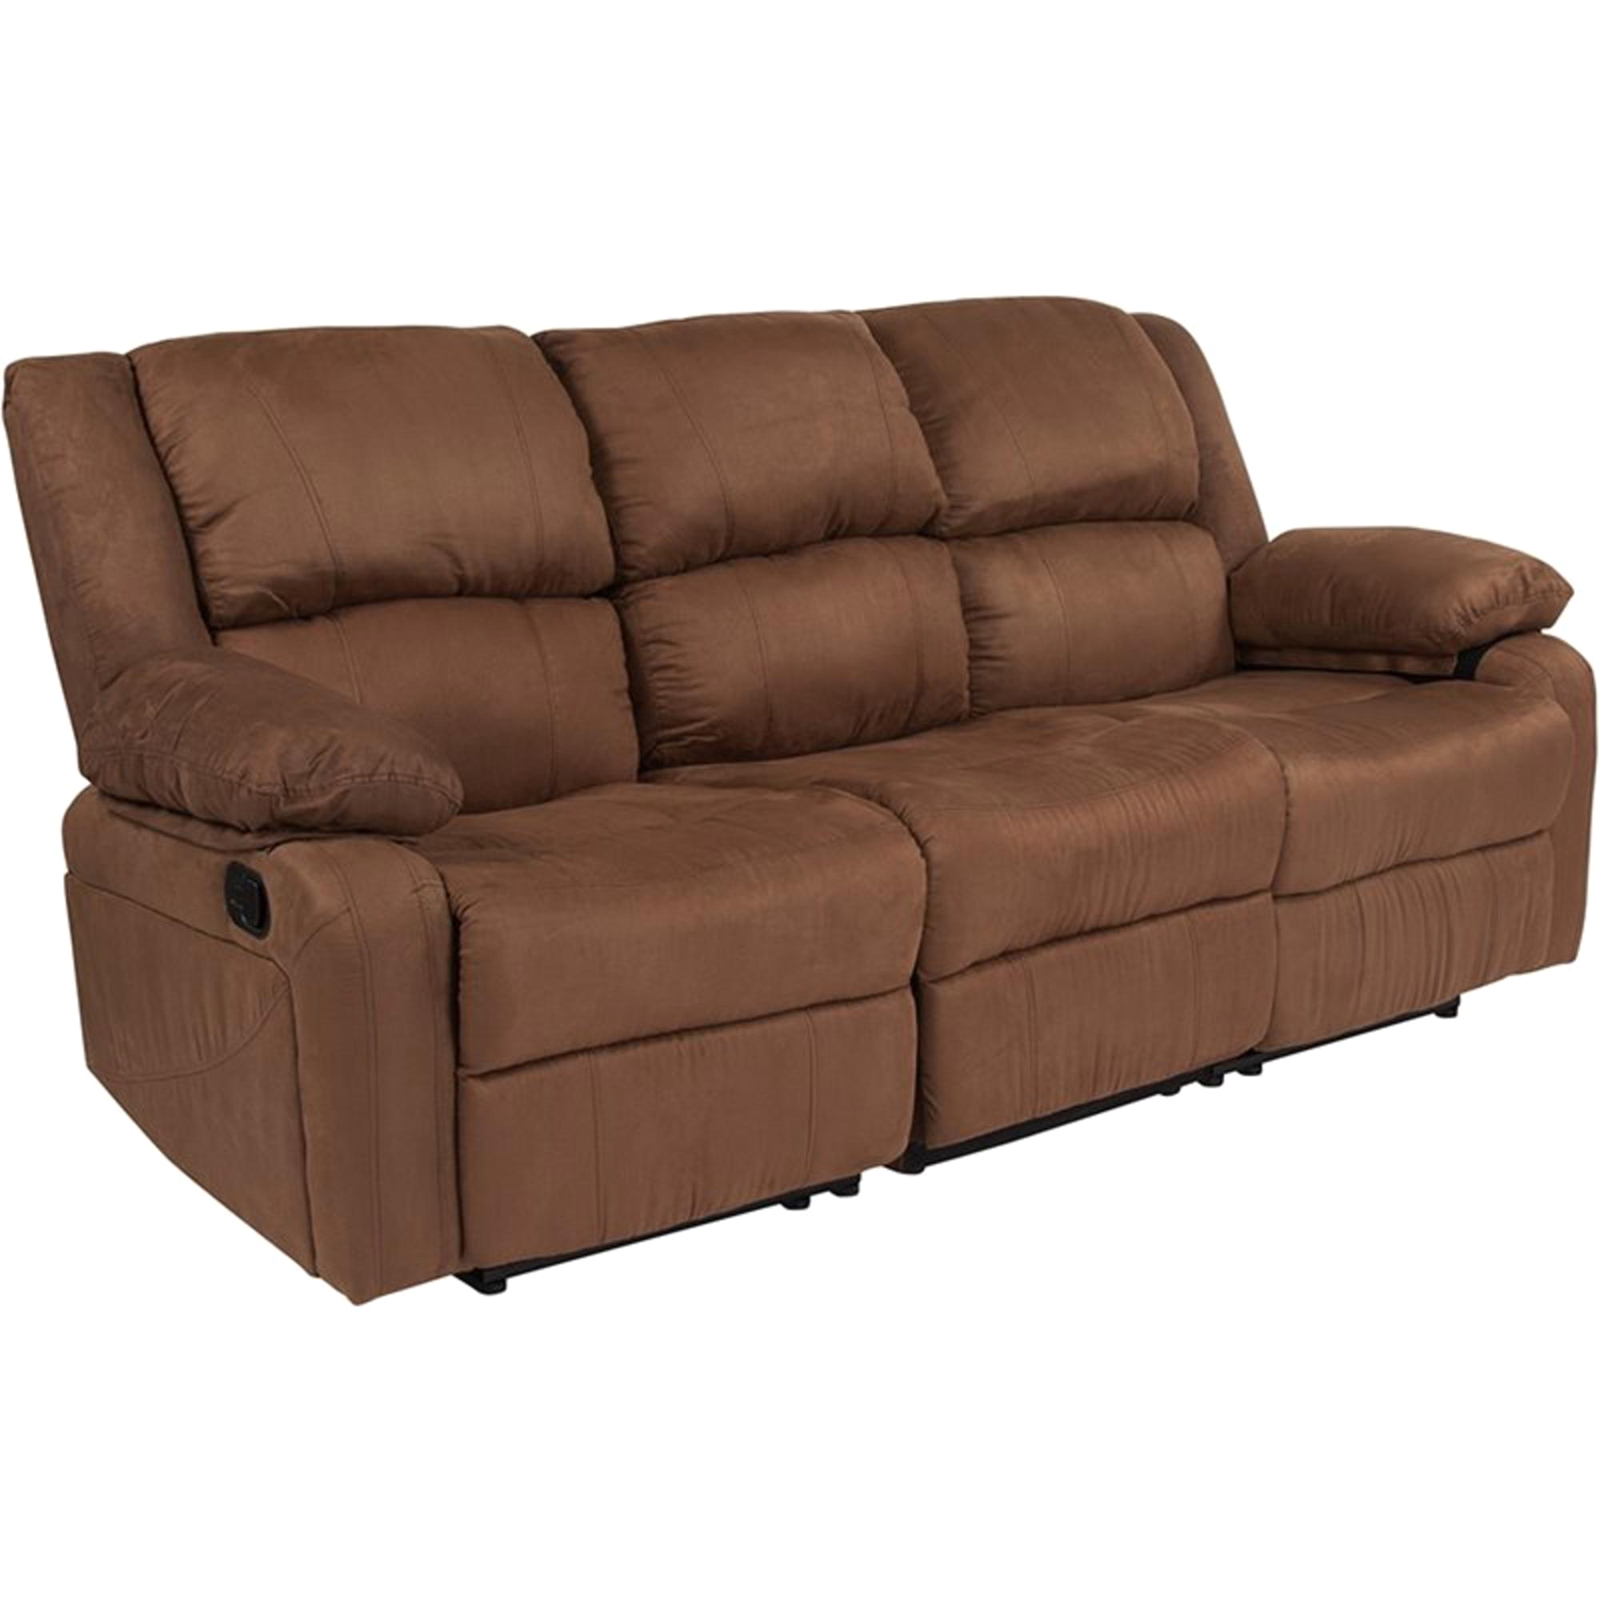 Flash Furniture Harmony 3 Seat Reclining Sofa - Chocolate Brown